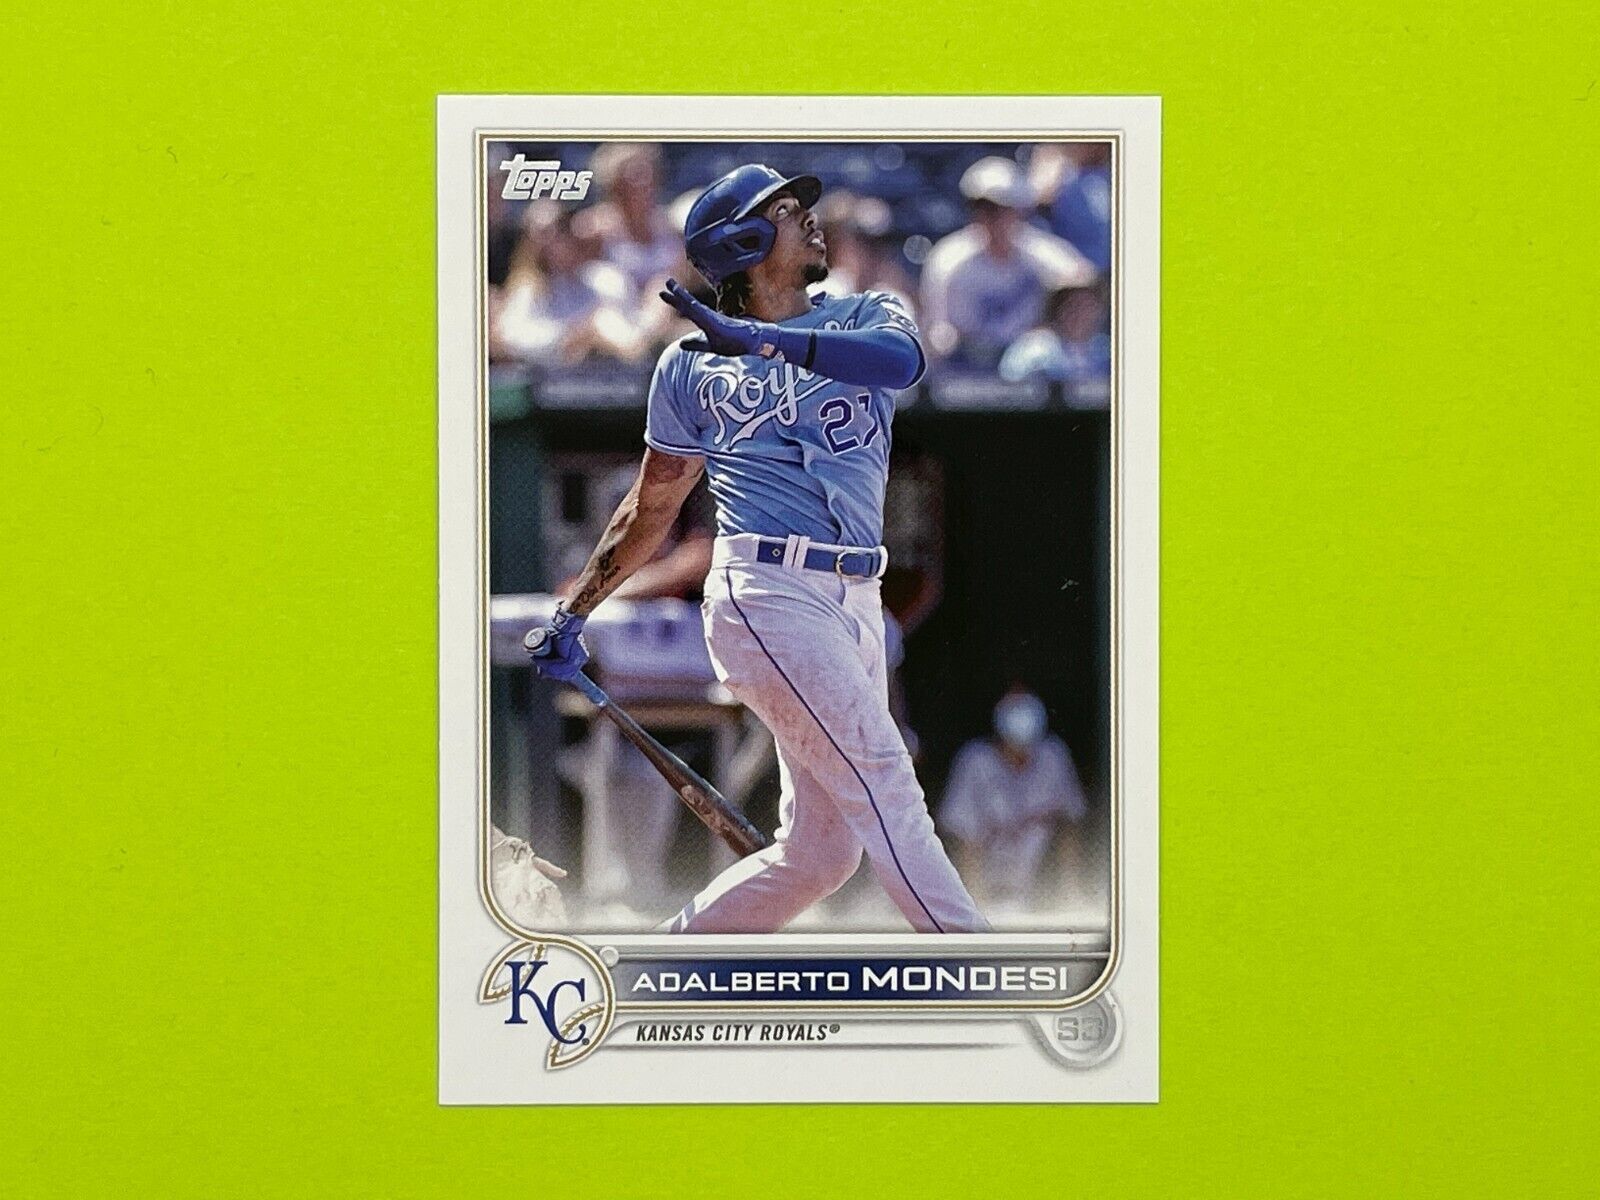 Card #:#589 Adalberto Mondesi - Kansas City Royals:2022 Topps Baseball Cards Series 2 #496-660 You Pick & Complete Your Set.